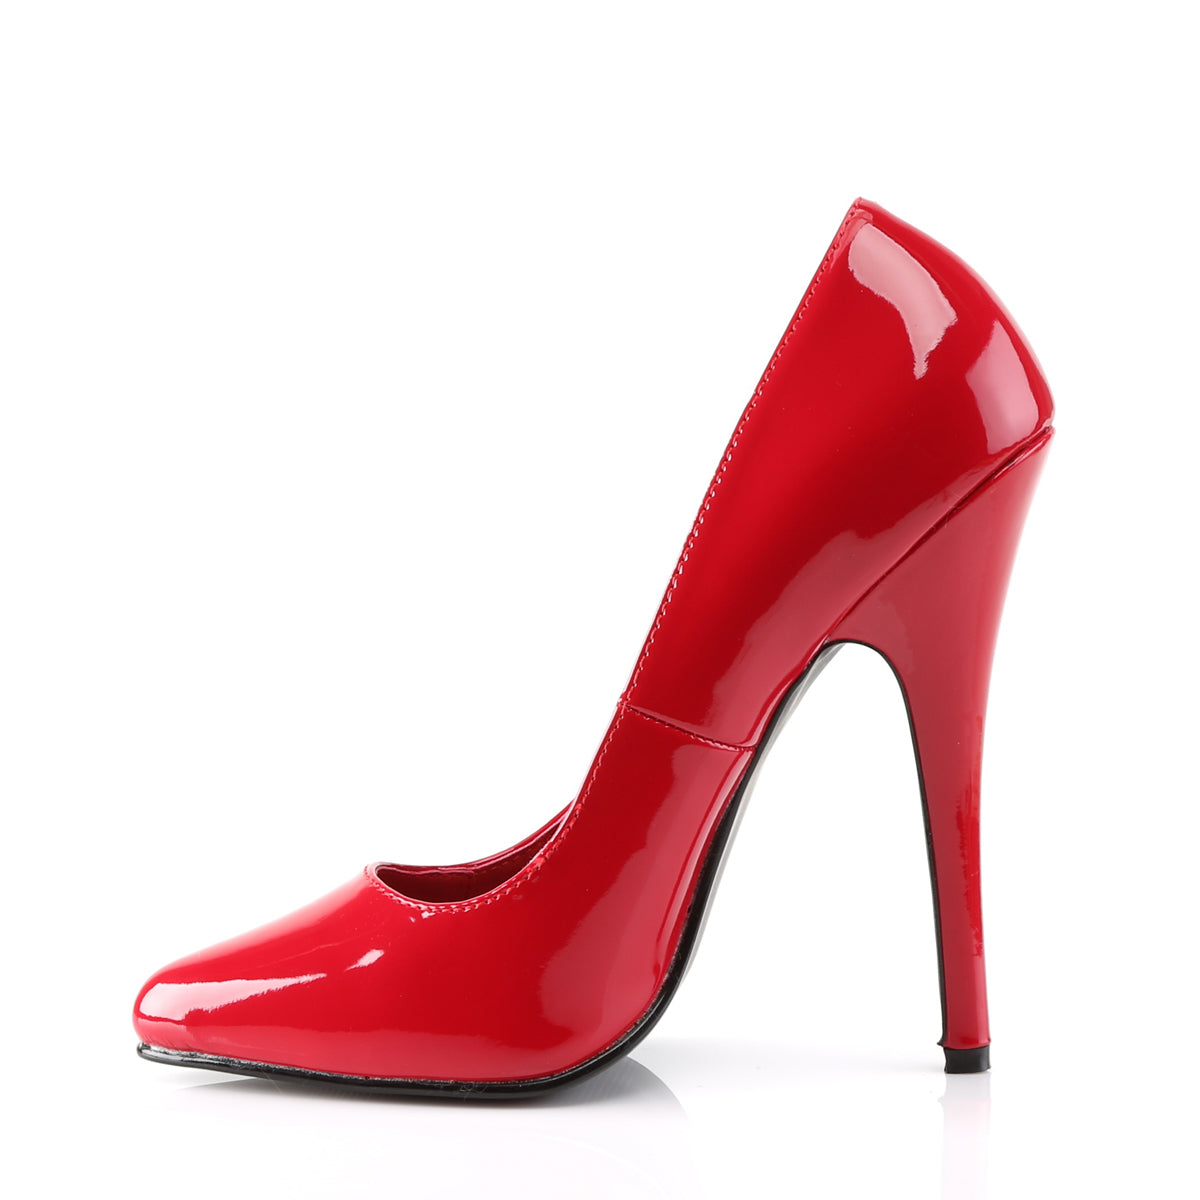 DOMINA-420 Devious Heels Red Patent Single Soles [Fetish Heels]